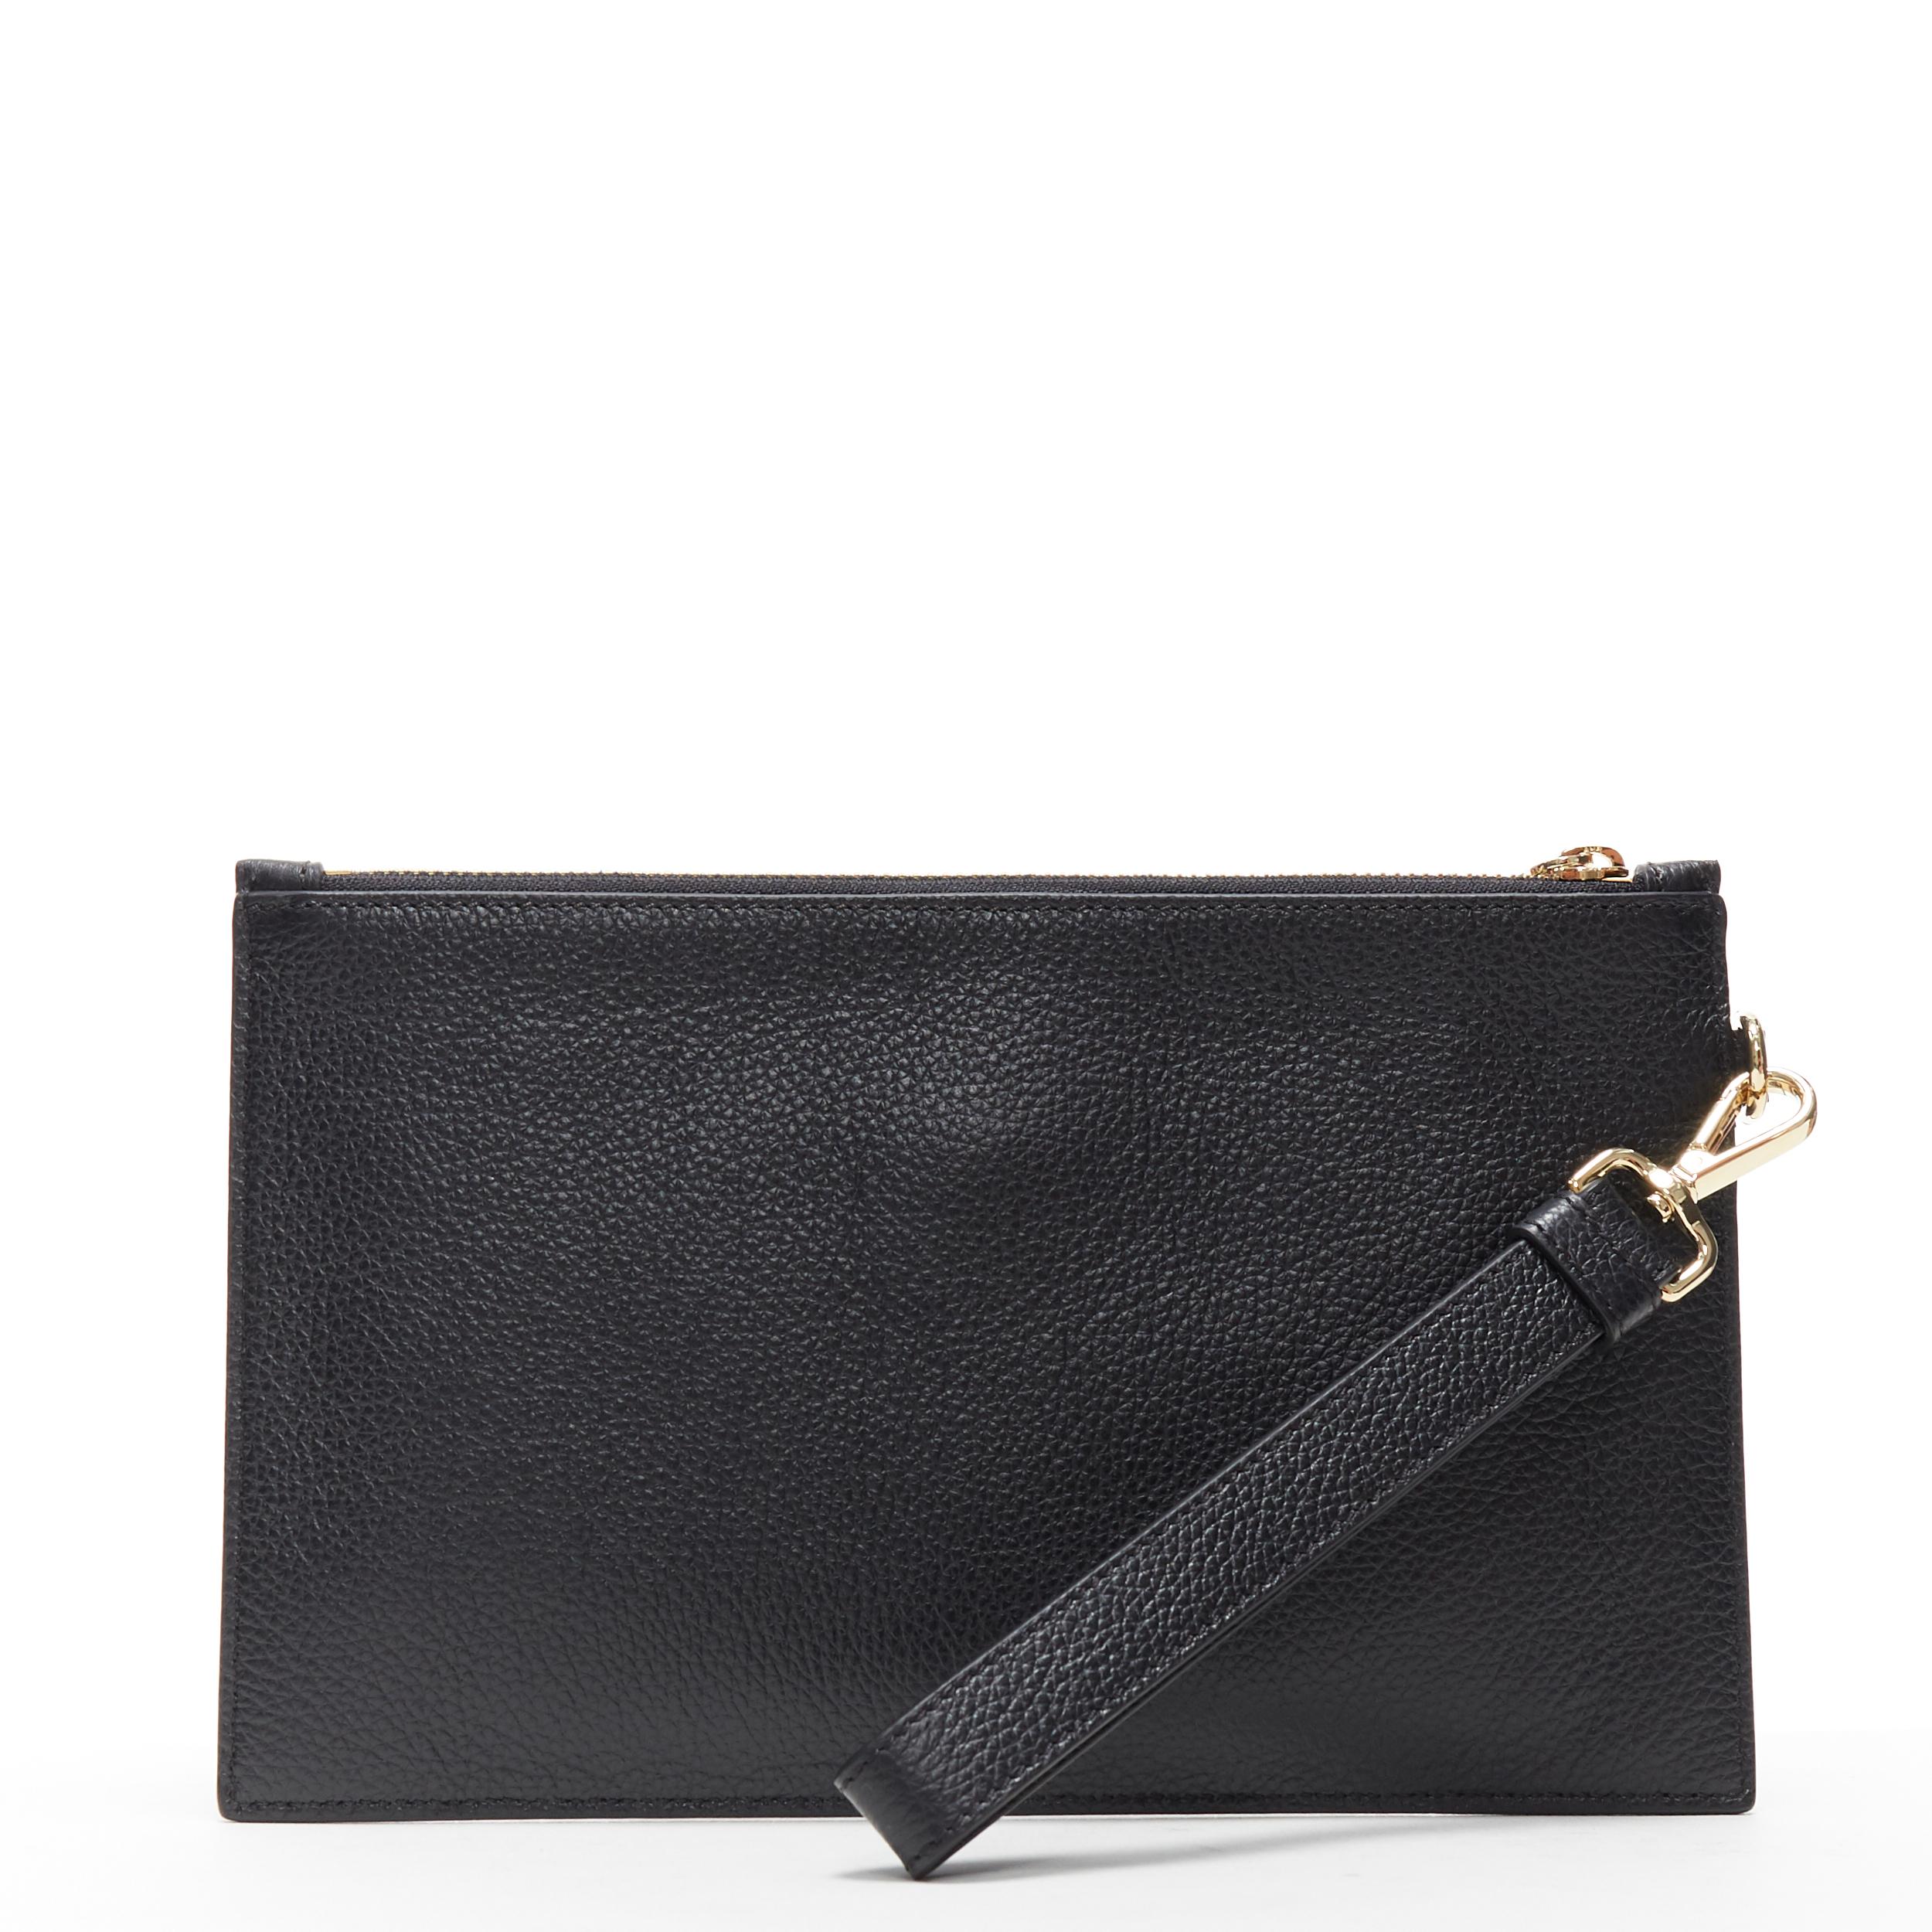 black leather wristlet clutch bag